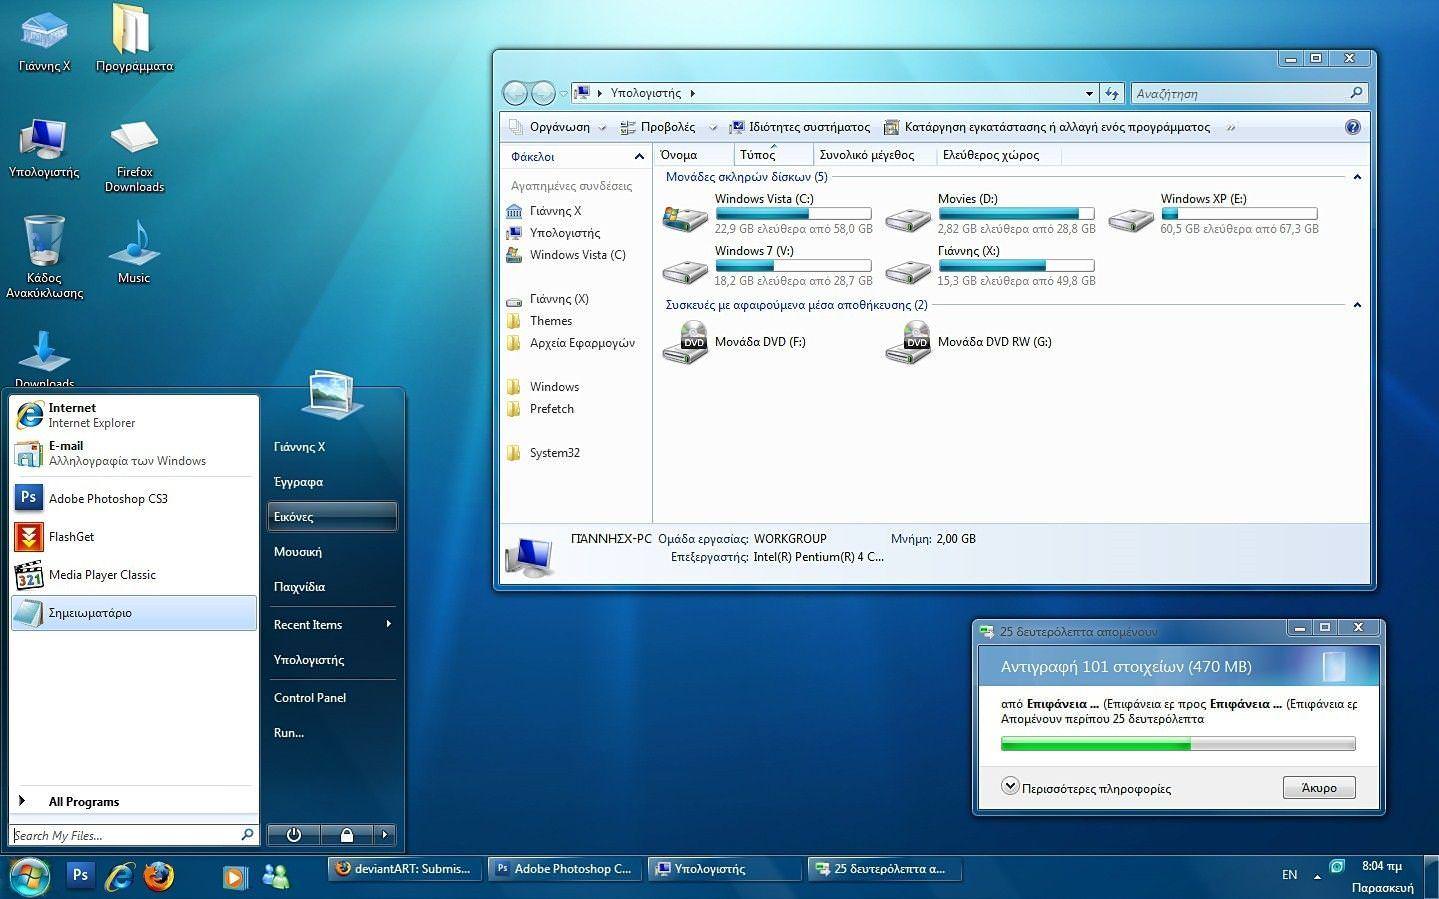 Windows 8 Enterprise Download Iso 64 Bit